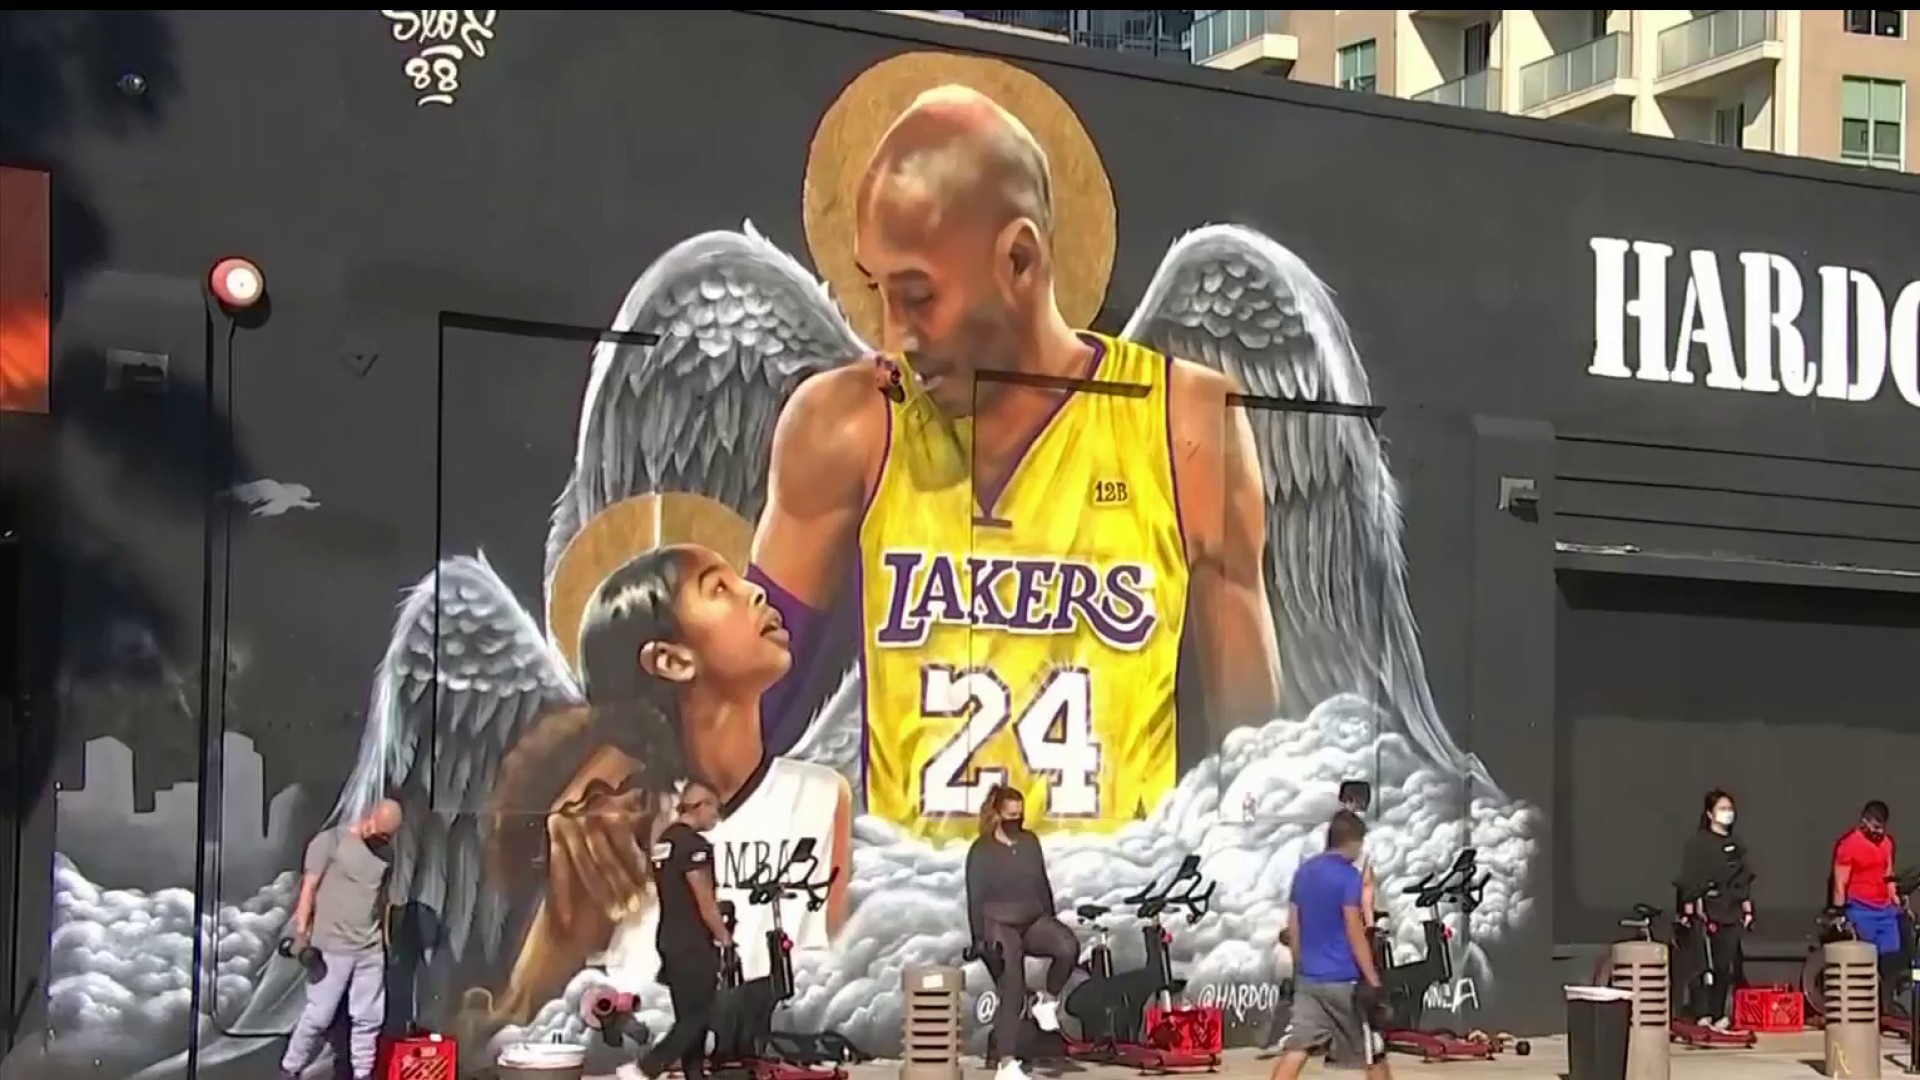 Kobe Bryant's two-year death anniversary brings back nostalgic